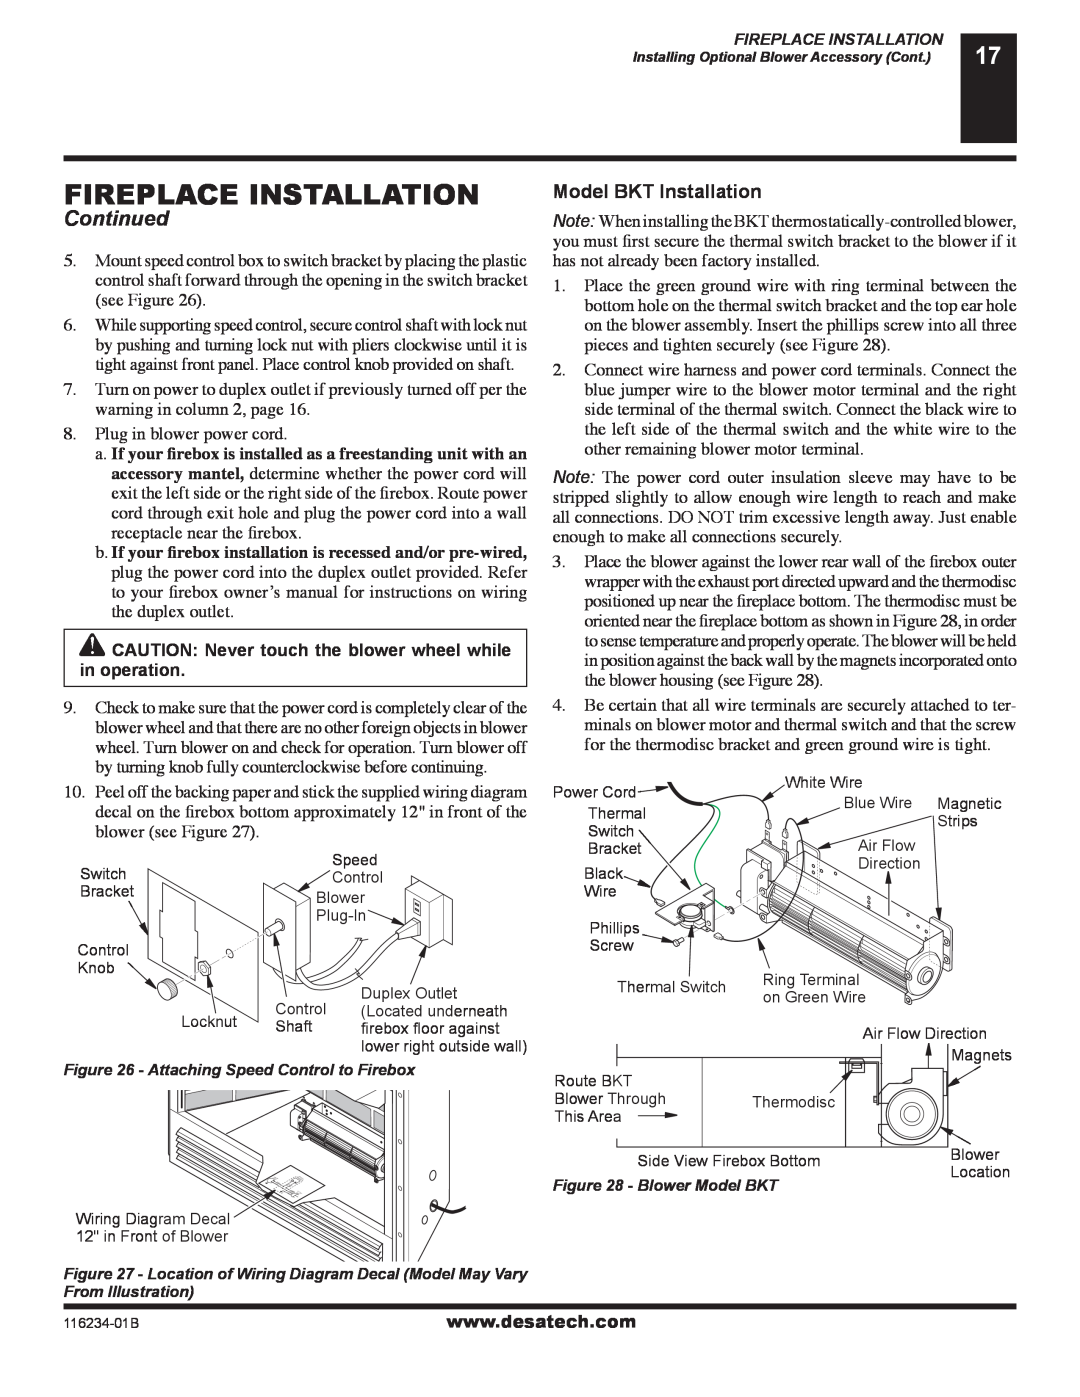 Desa (V)TC36NE, (V)TC36PE installation manual Fireplace Installation, Continued, Model BKT Installation 